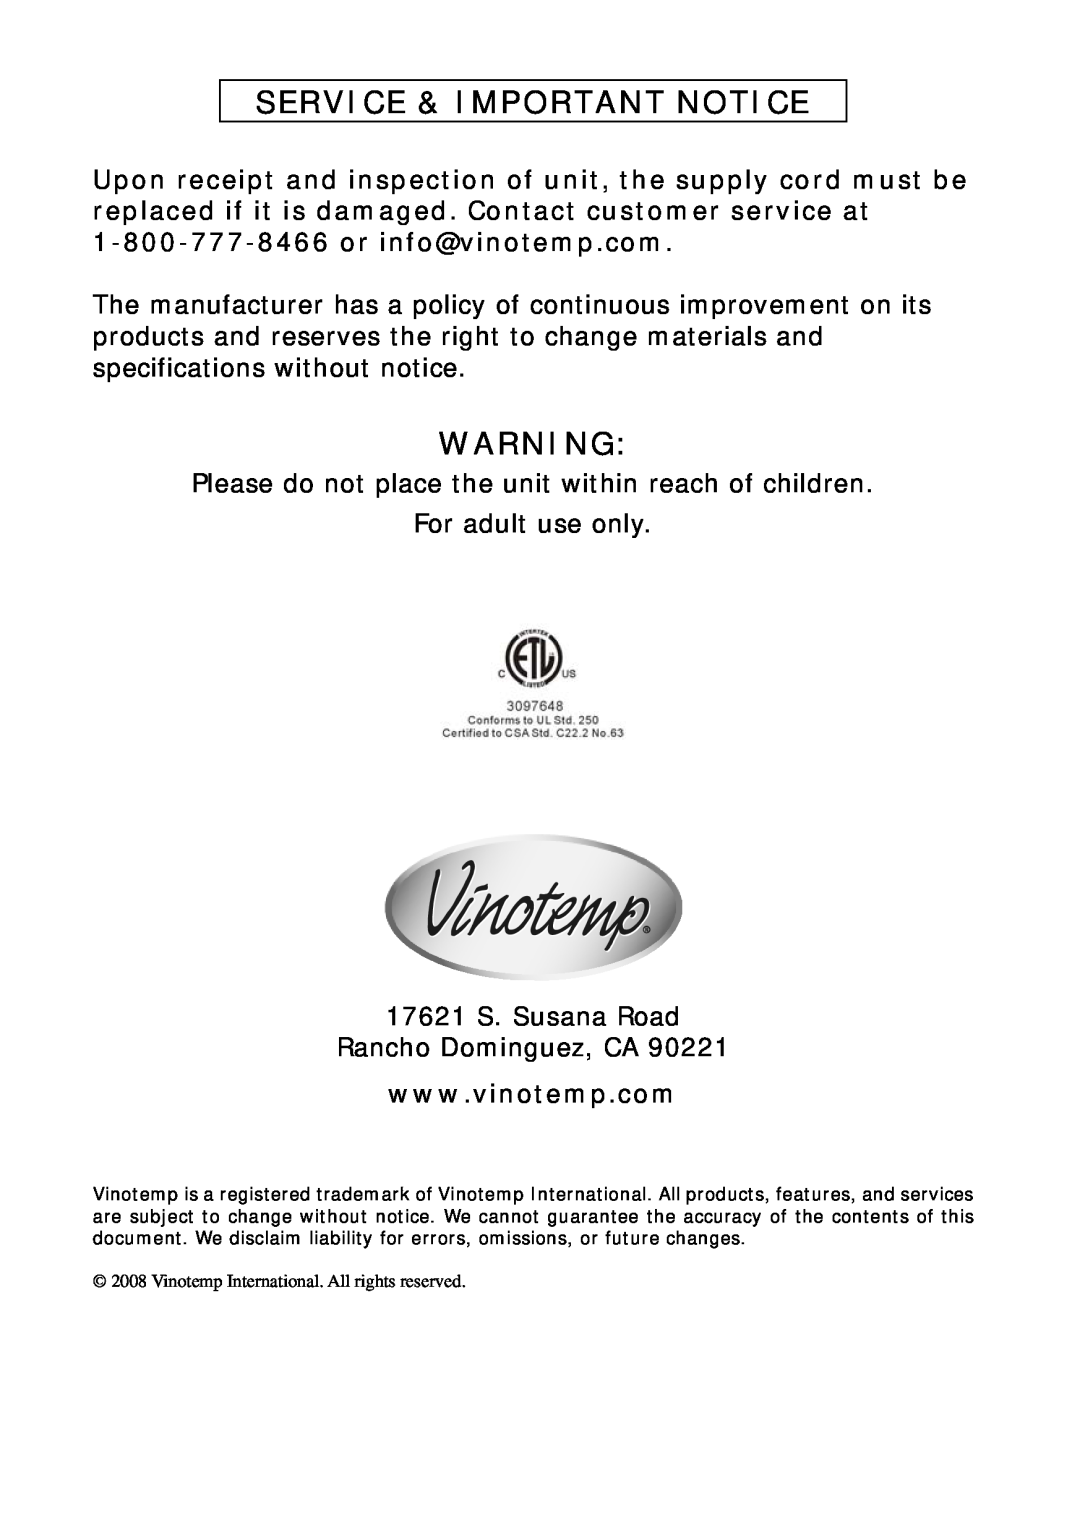 Vinotemp VT48TEDS2Z owner manual Service & Important Notice 